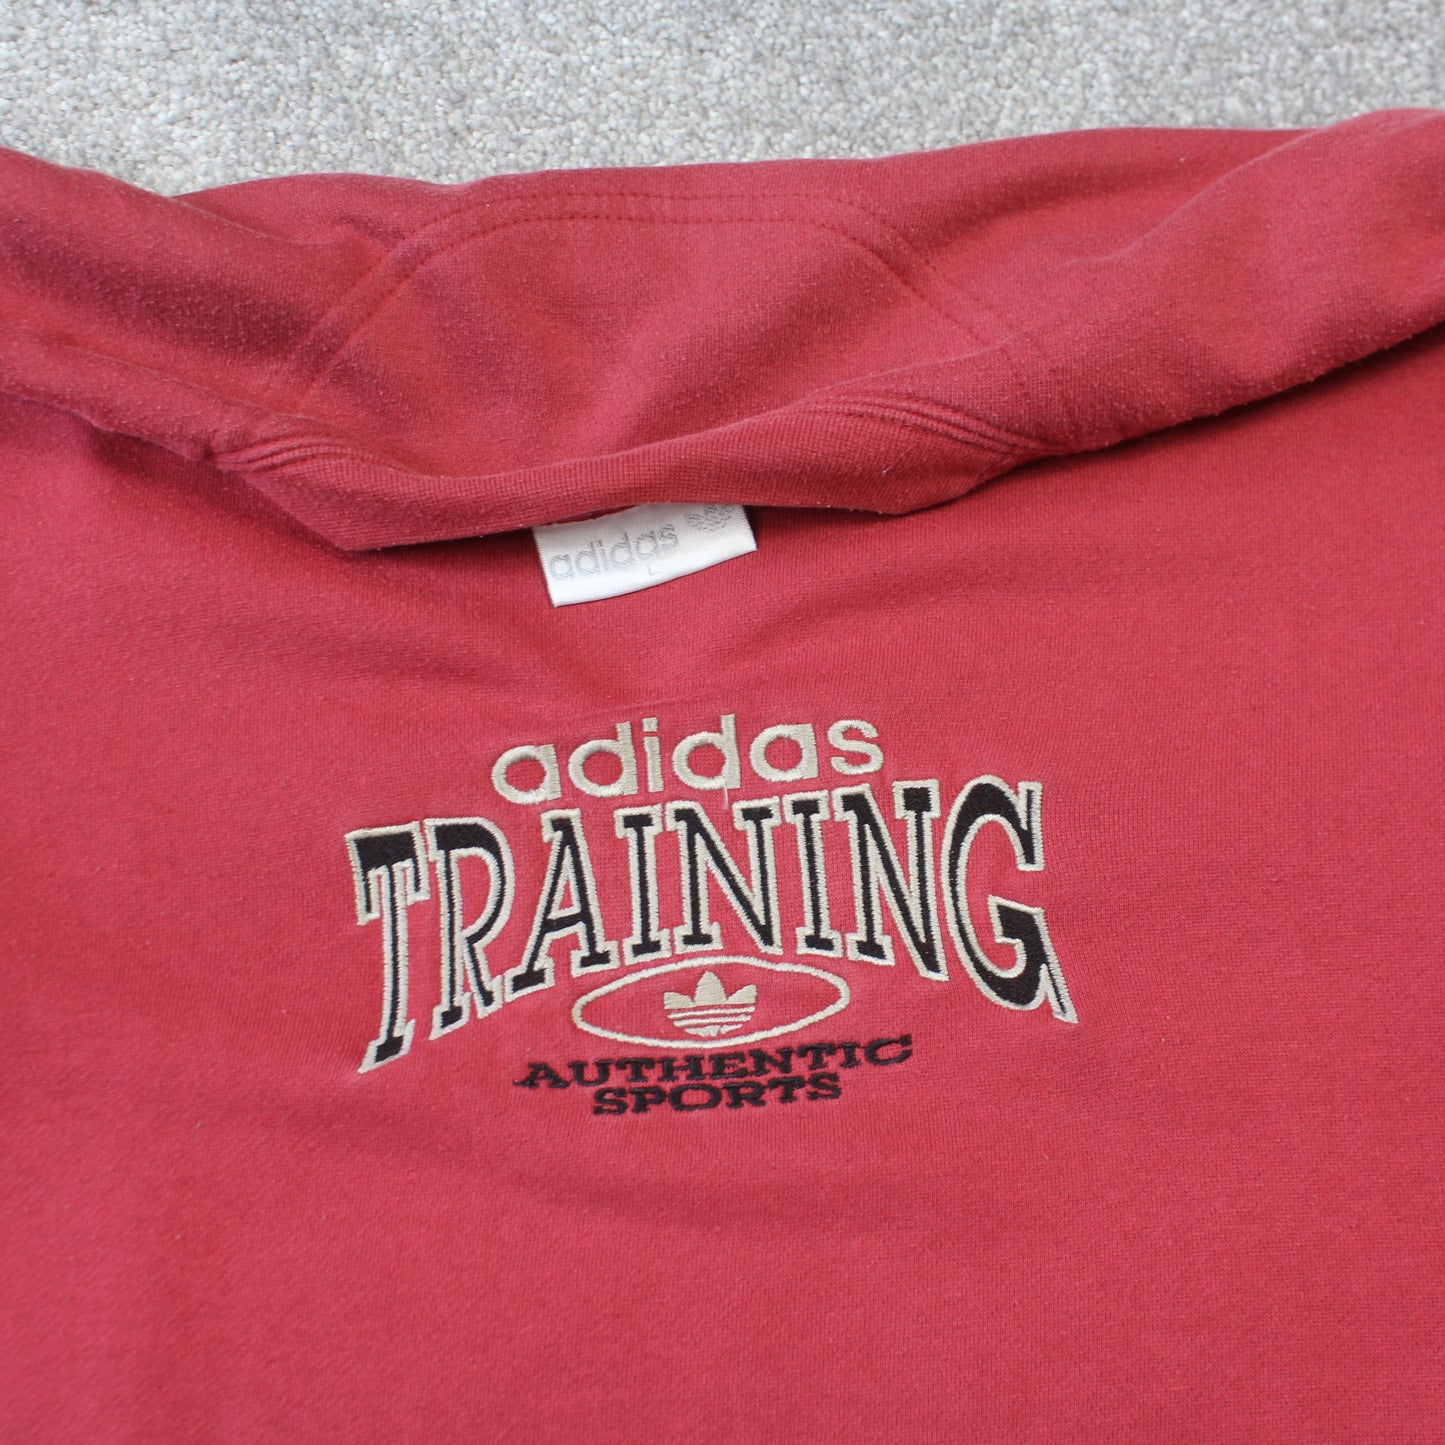 RARE Vintage 1990s Adidas Training Sweatshirt Red - (M)